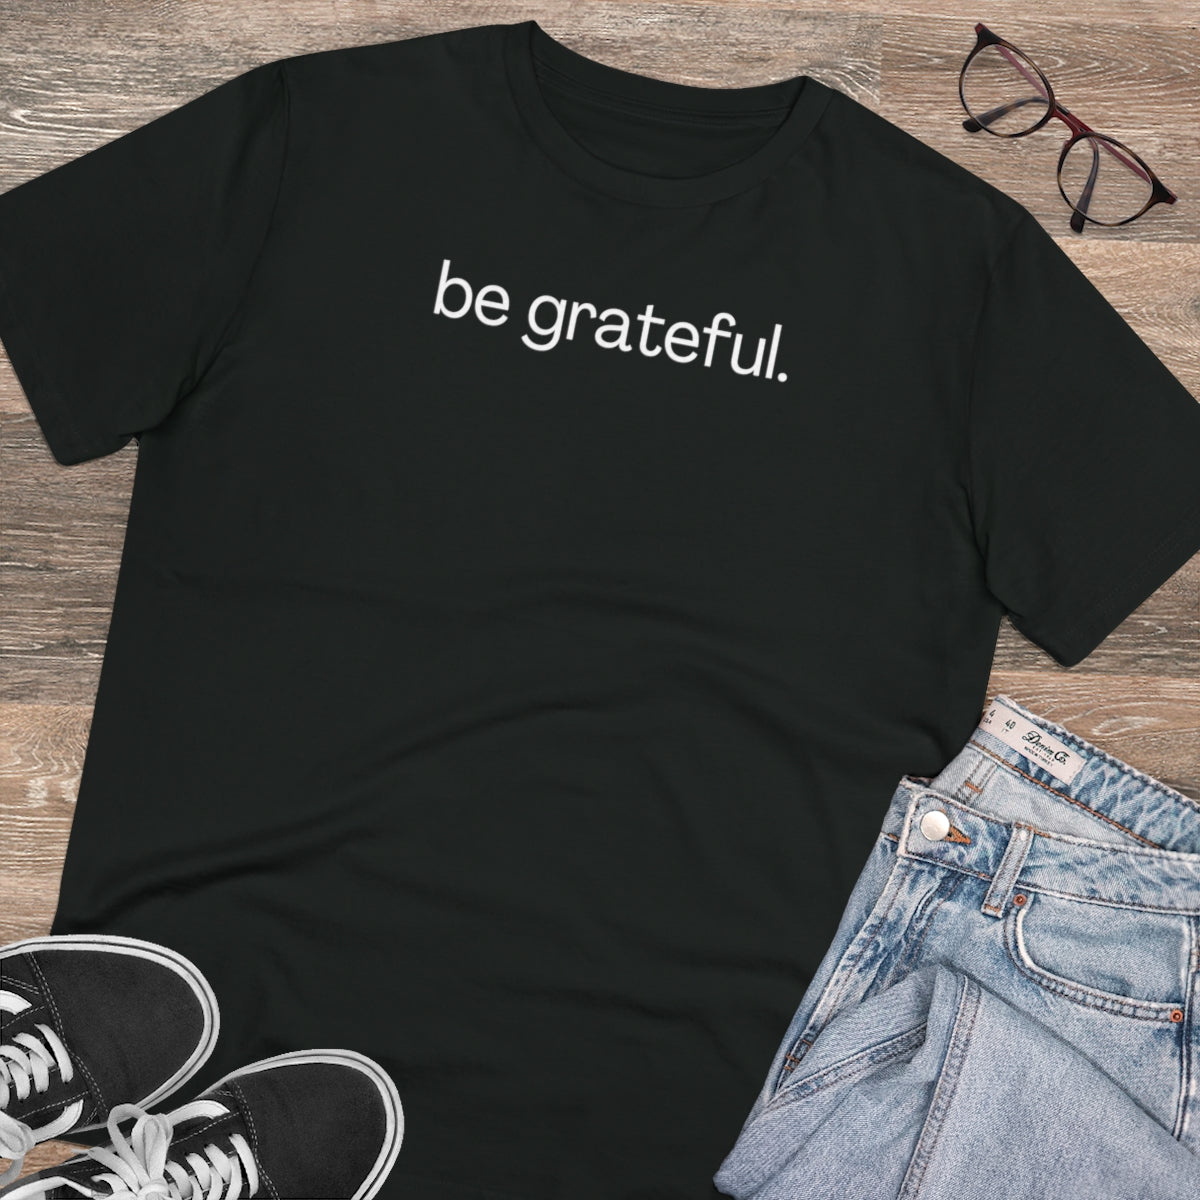 be grateful. - Organic Creator T-shirt - Unisex